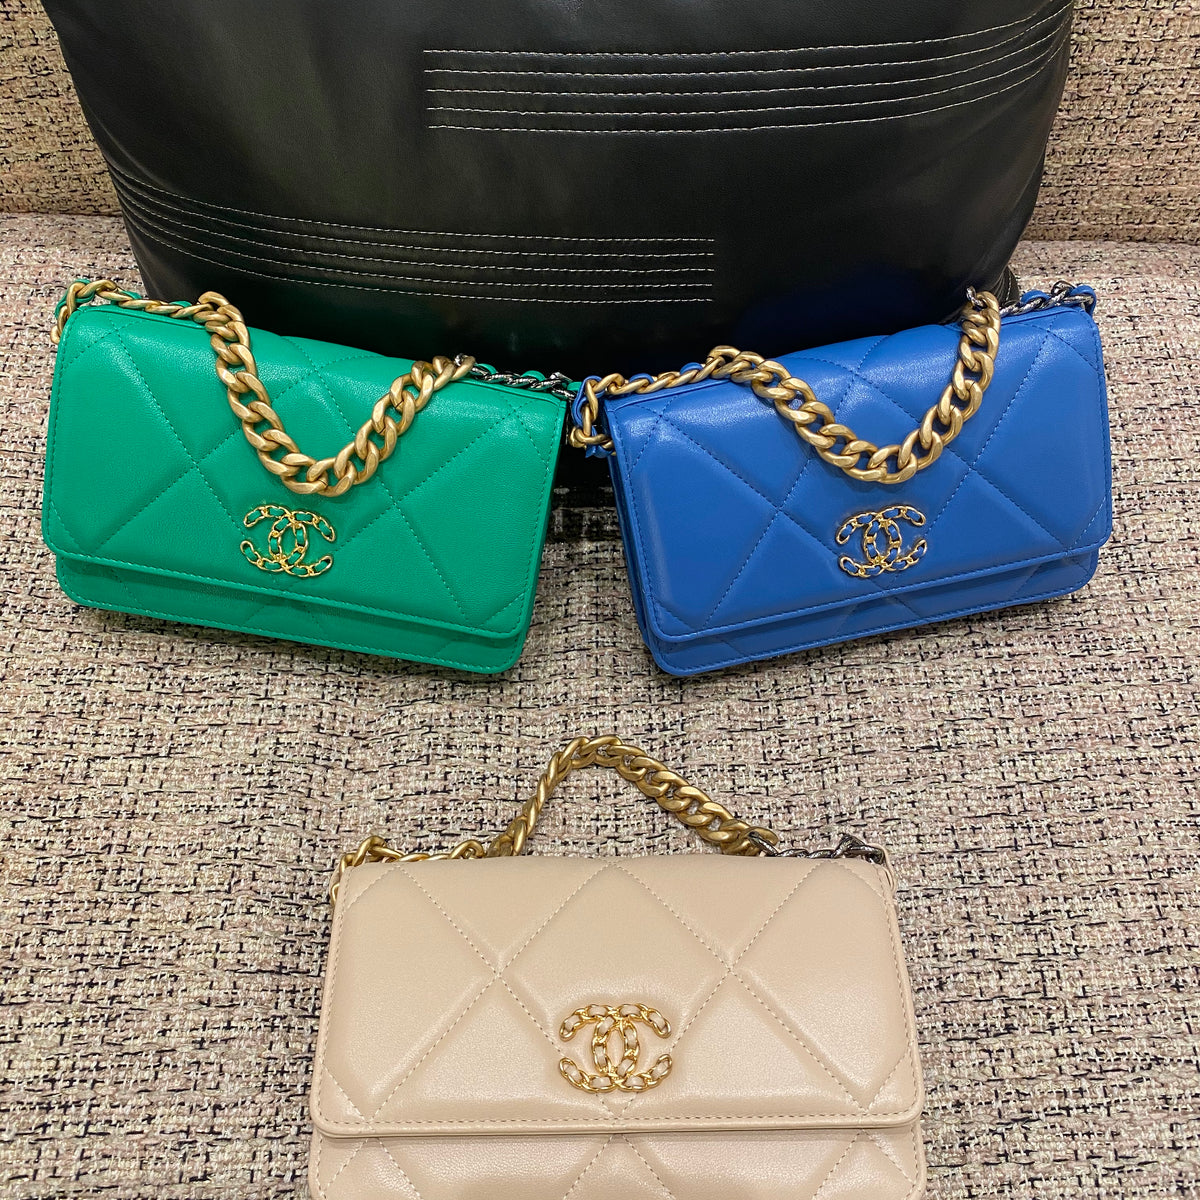 SS2020 Chanel 19 WOC bags – hey it's personal shopper london